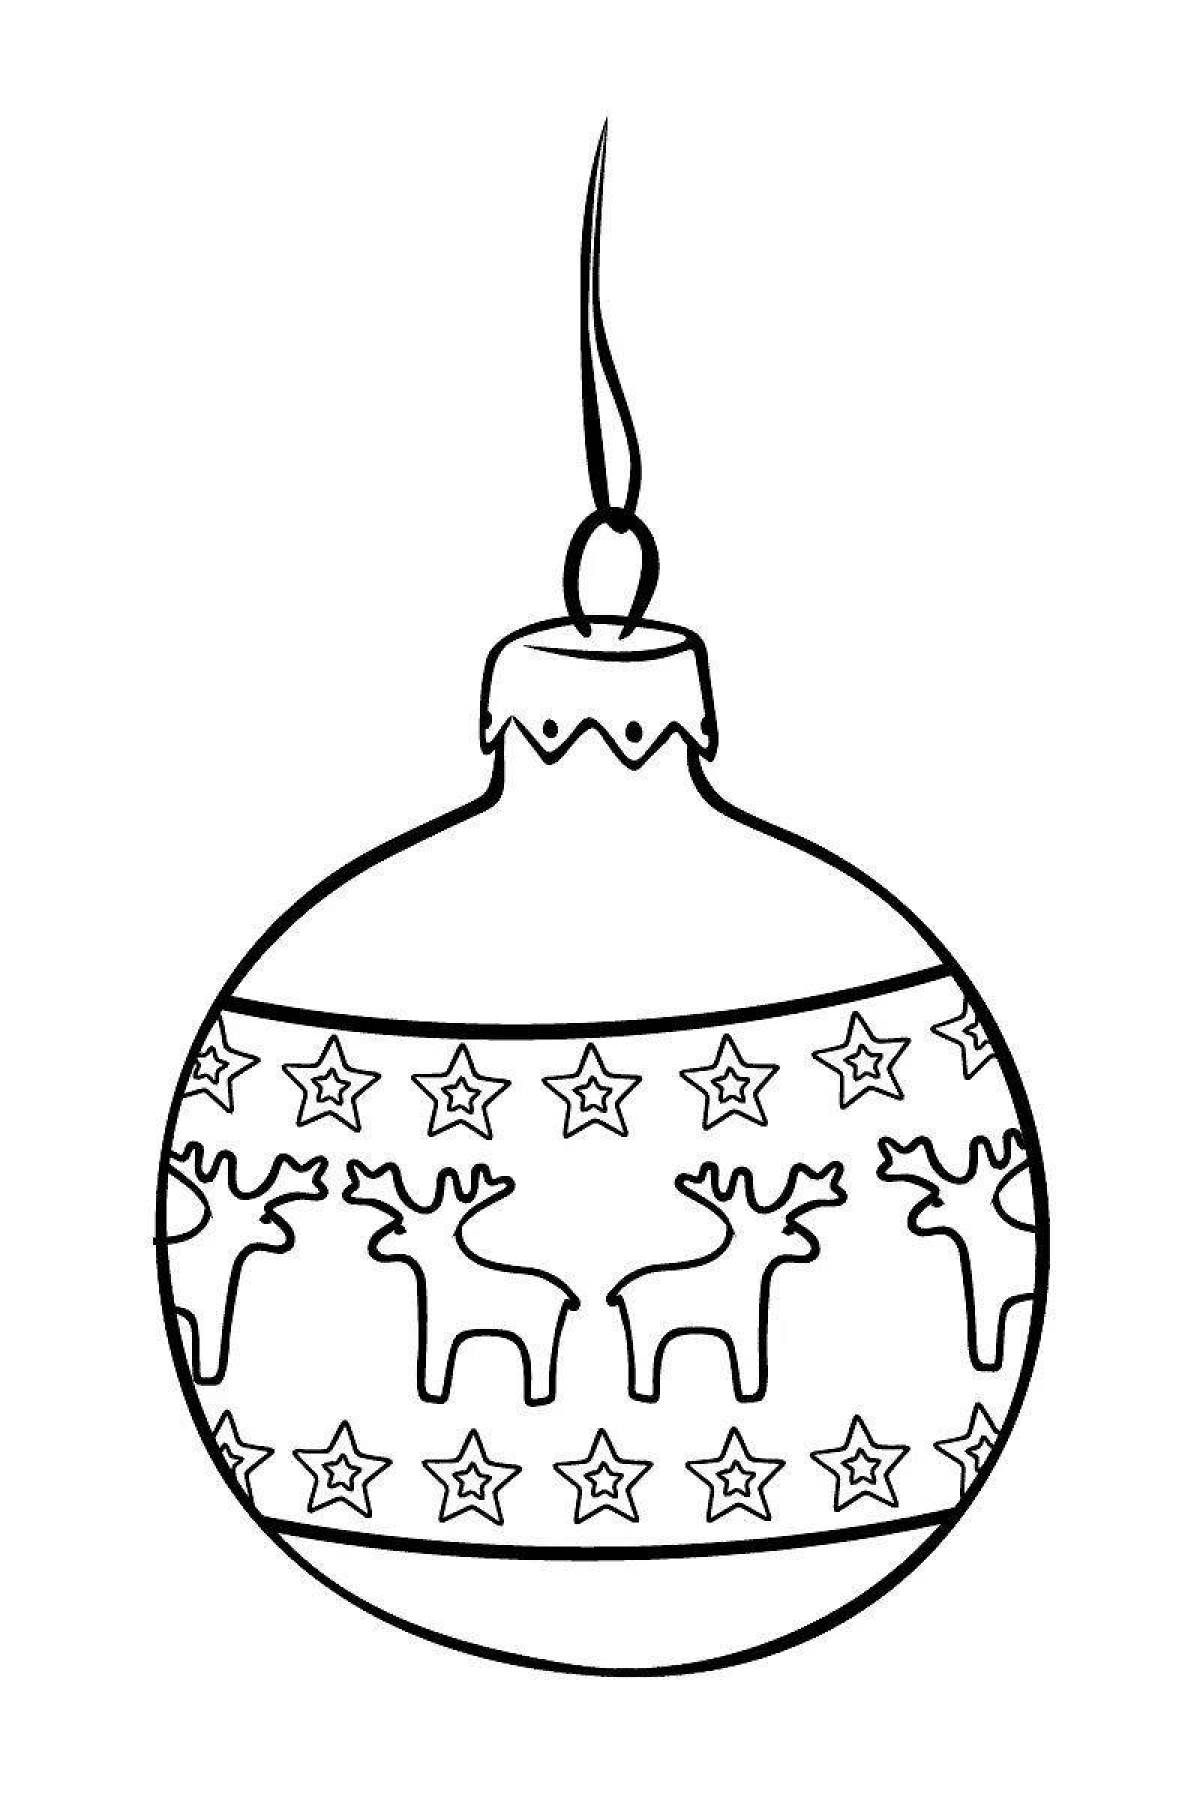 Christmas ball coloring page for kids